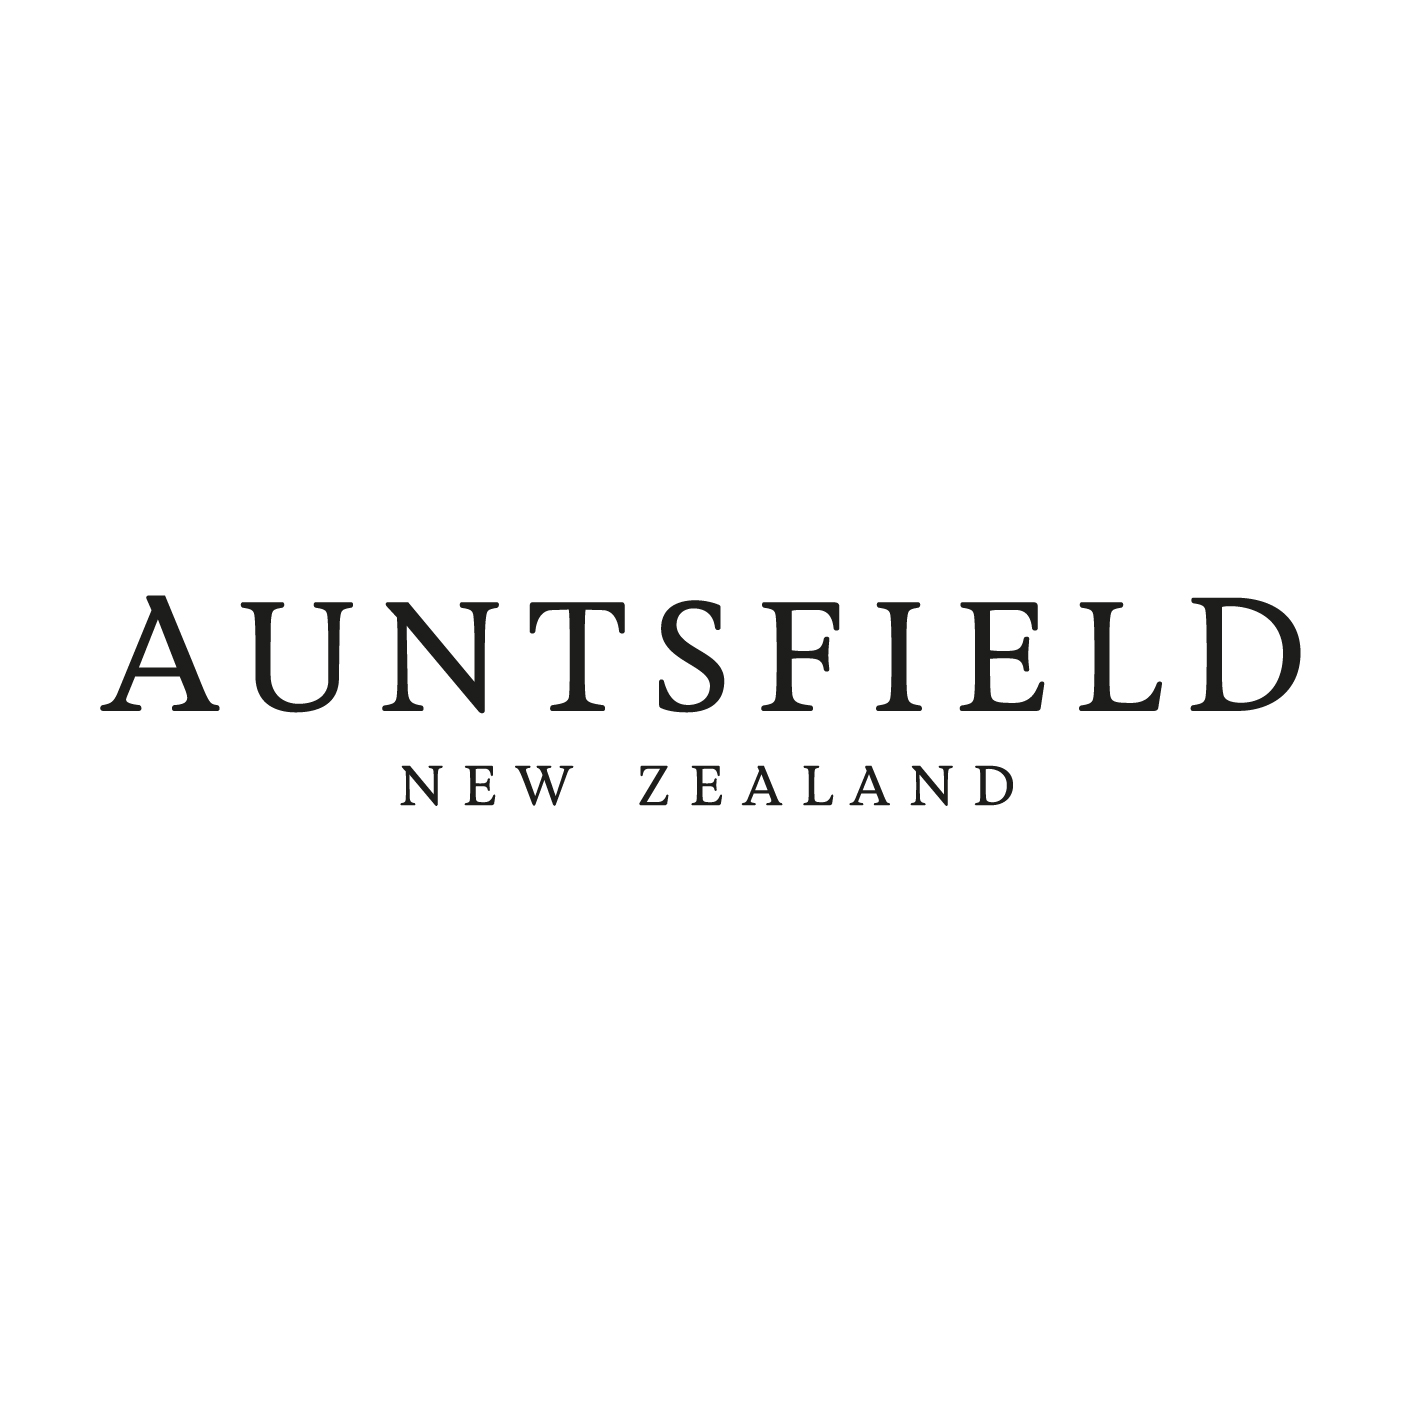 Auntsfield Estate